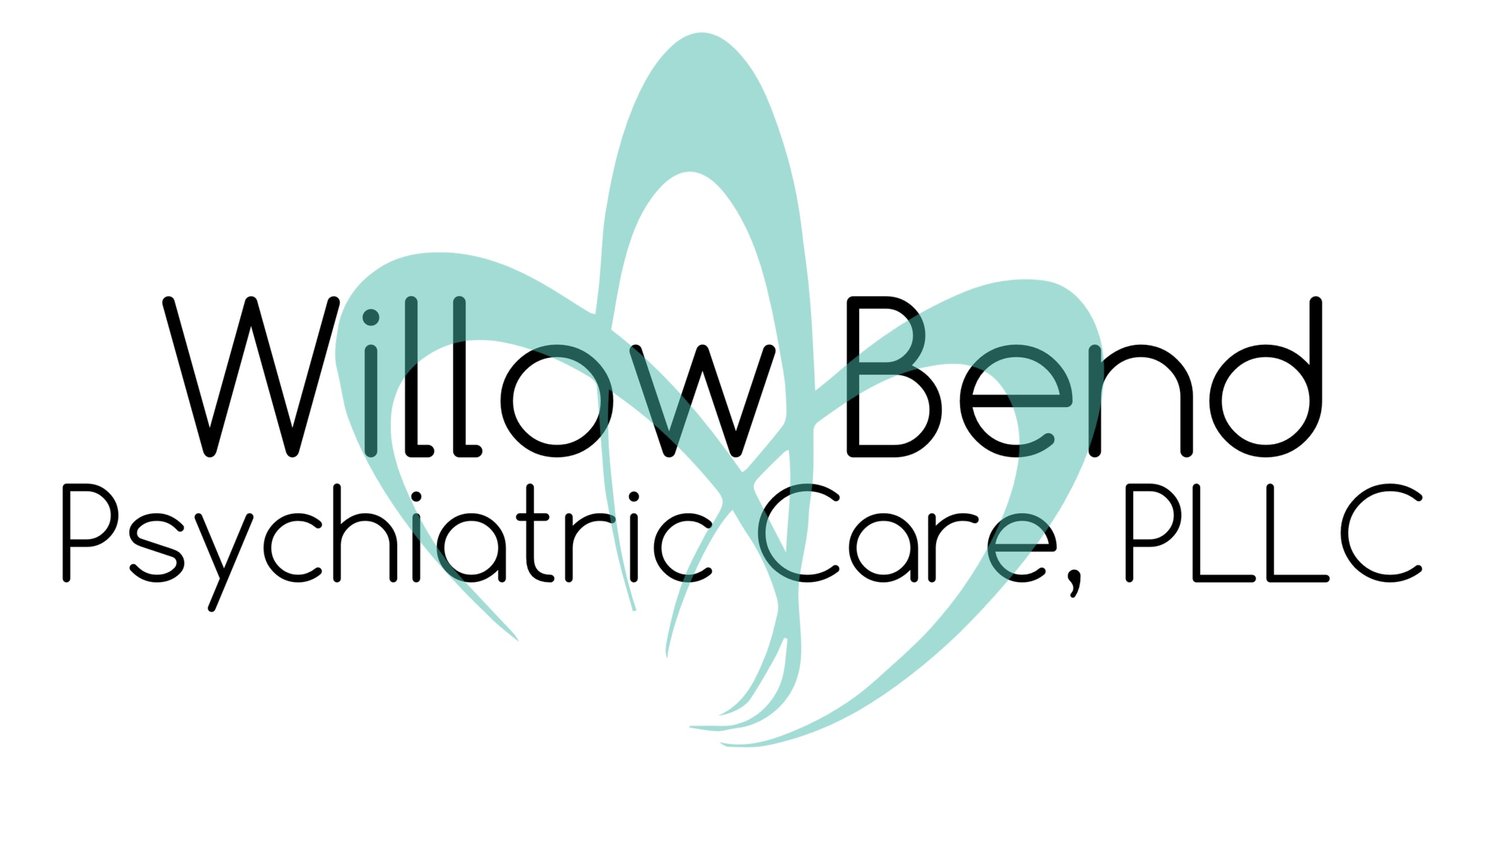 Willow Bend Psychiatric Care, PLLC